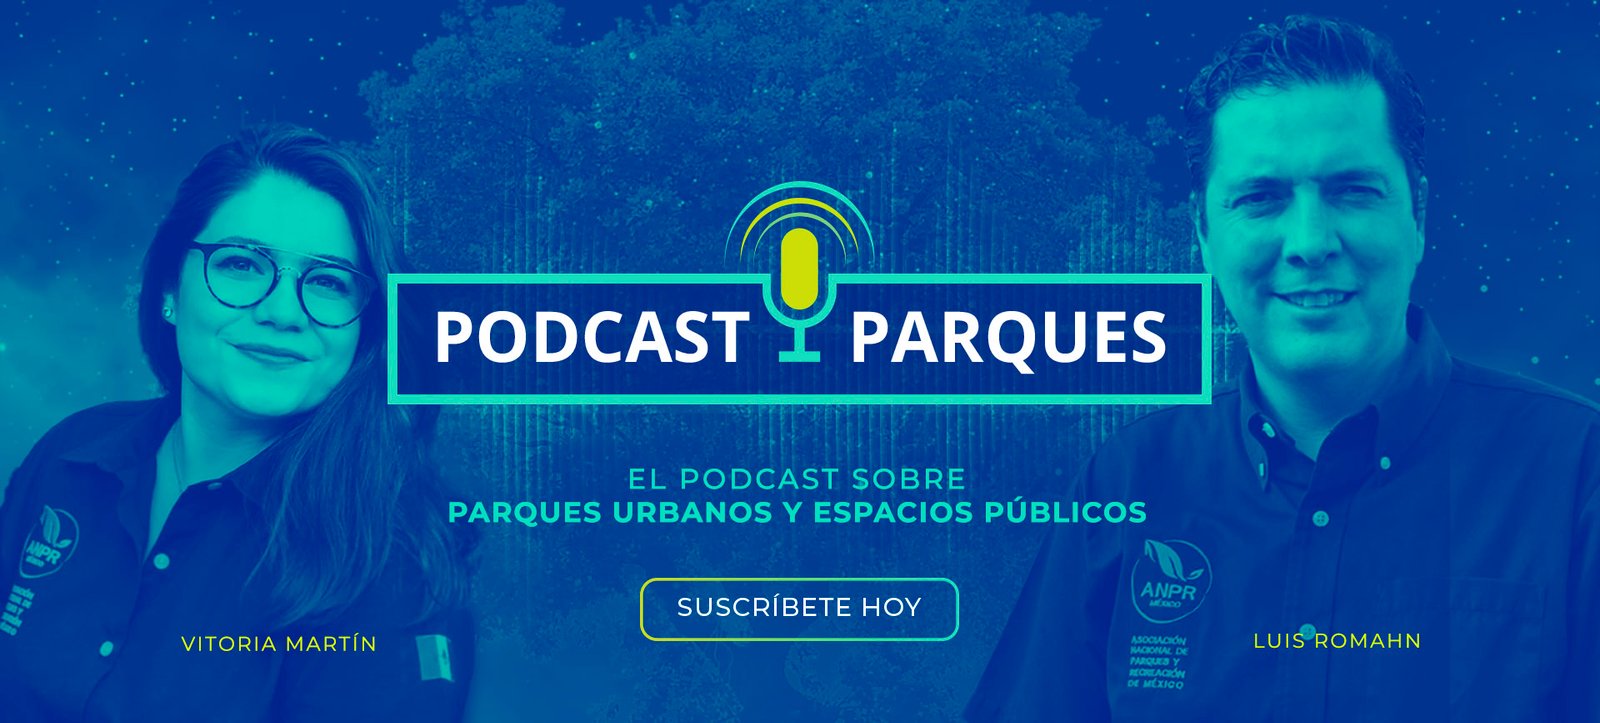 Portada Podcast Parques